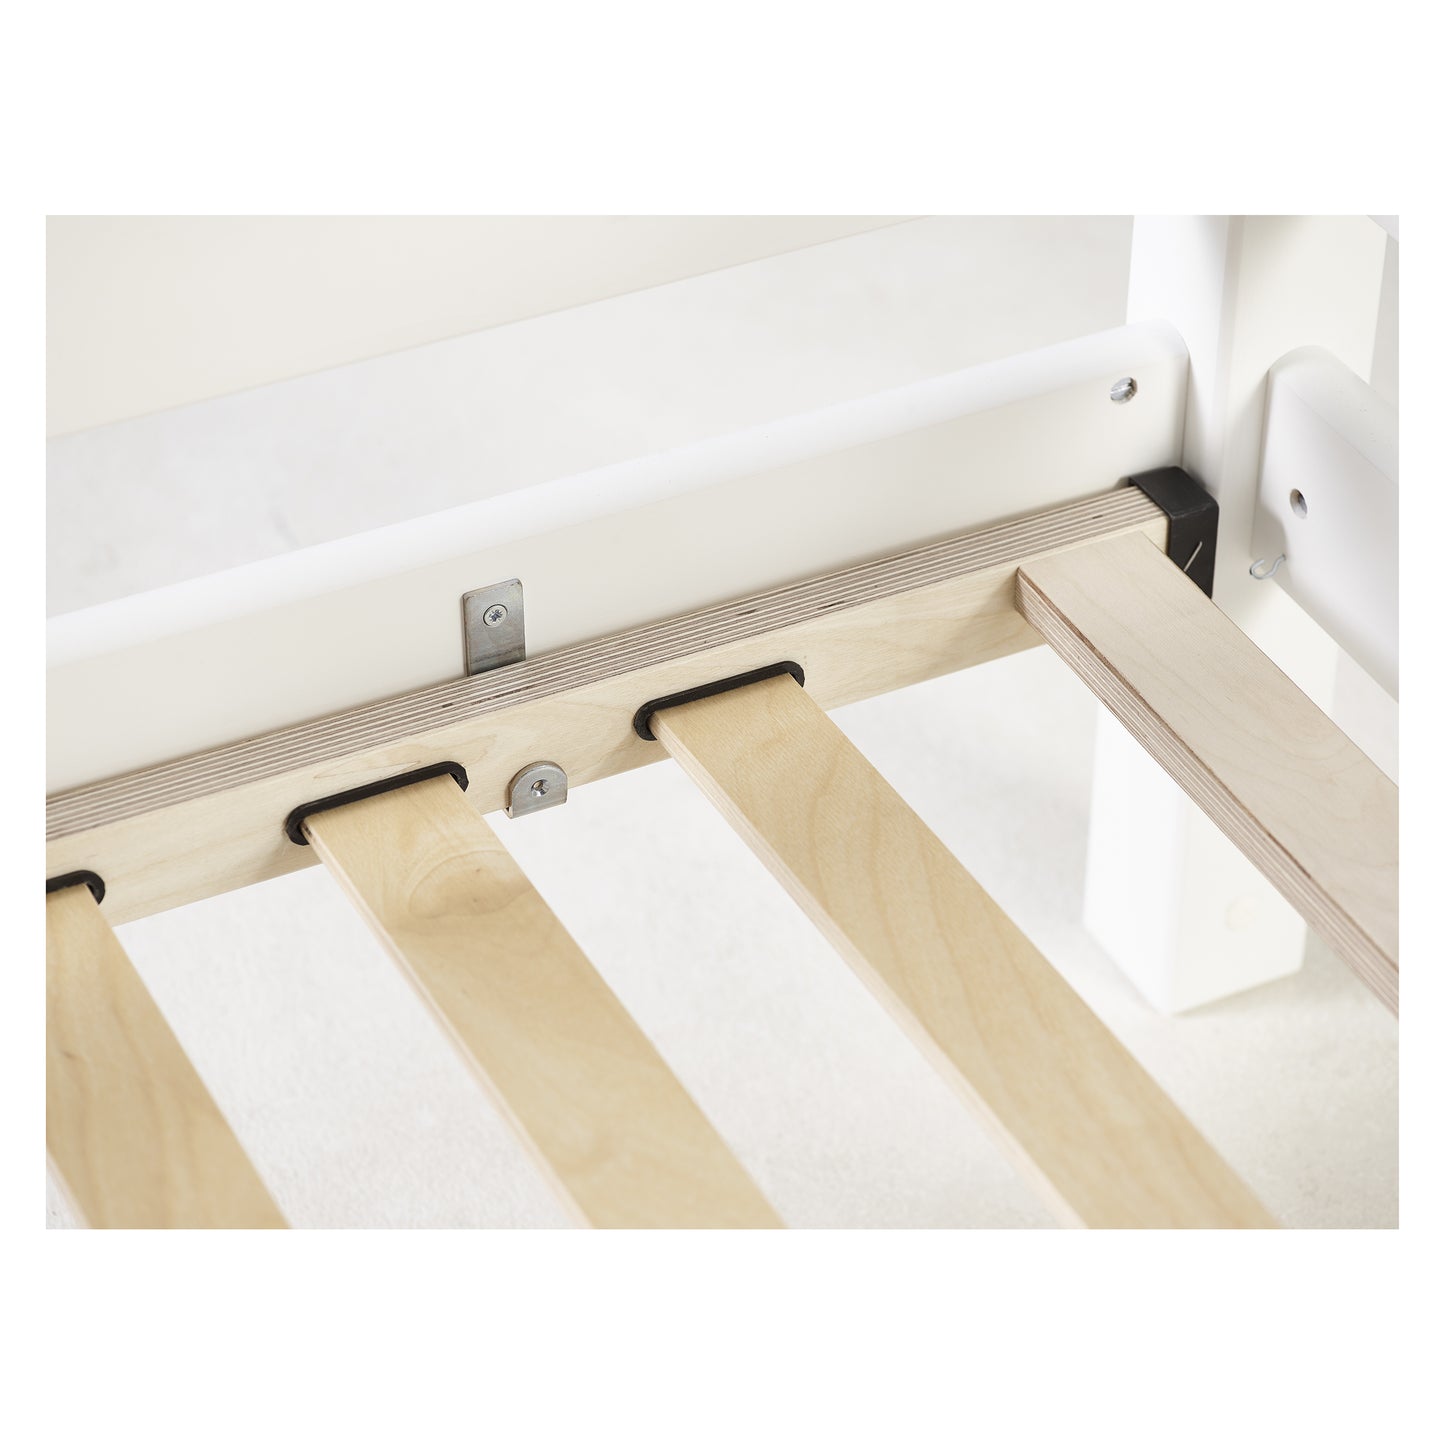 Hoppekids ECO Luxury Junior bed with 3/4 bed rail, Flexible slat frame